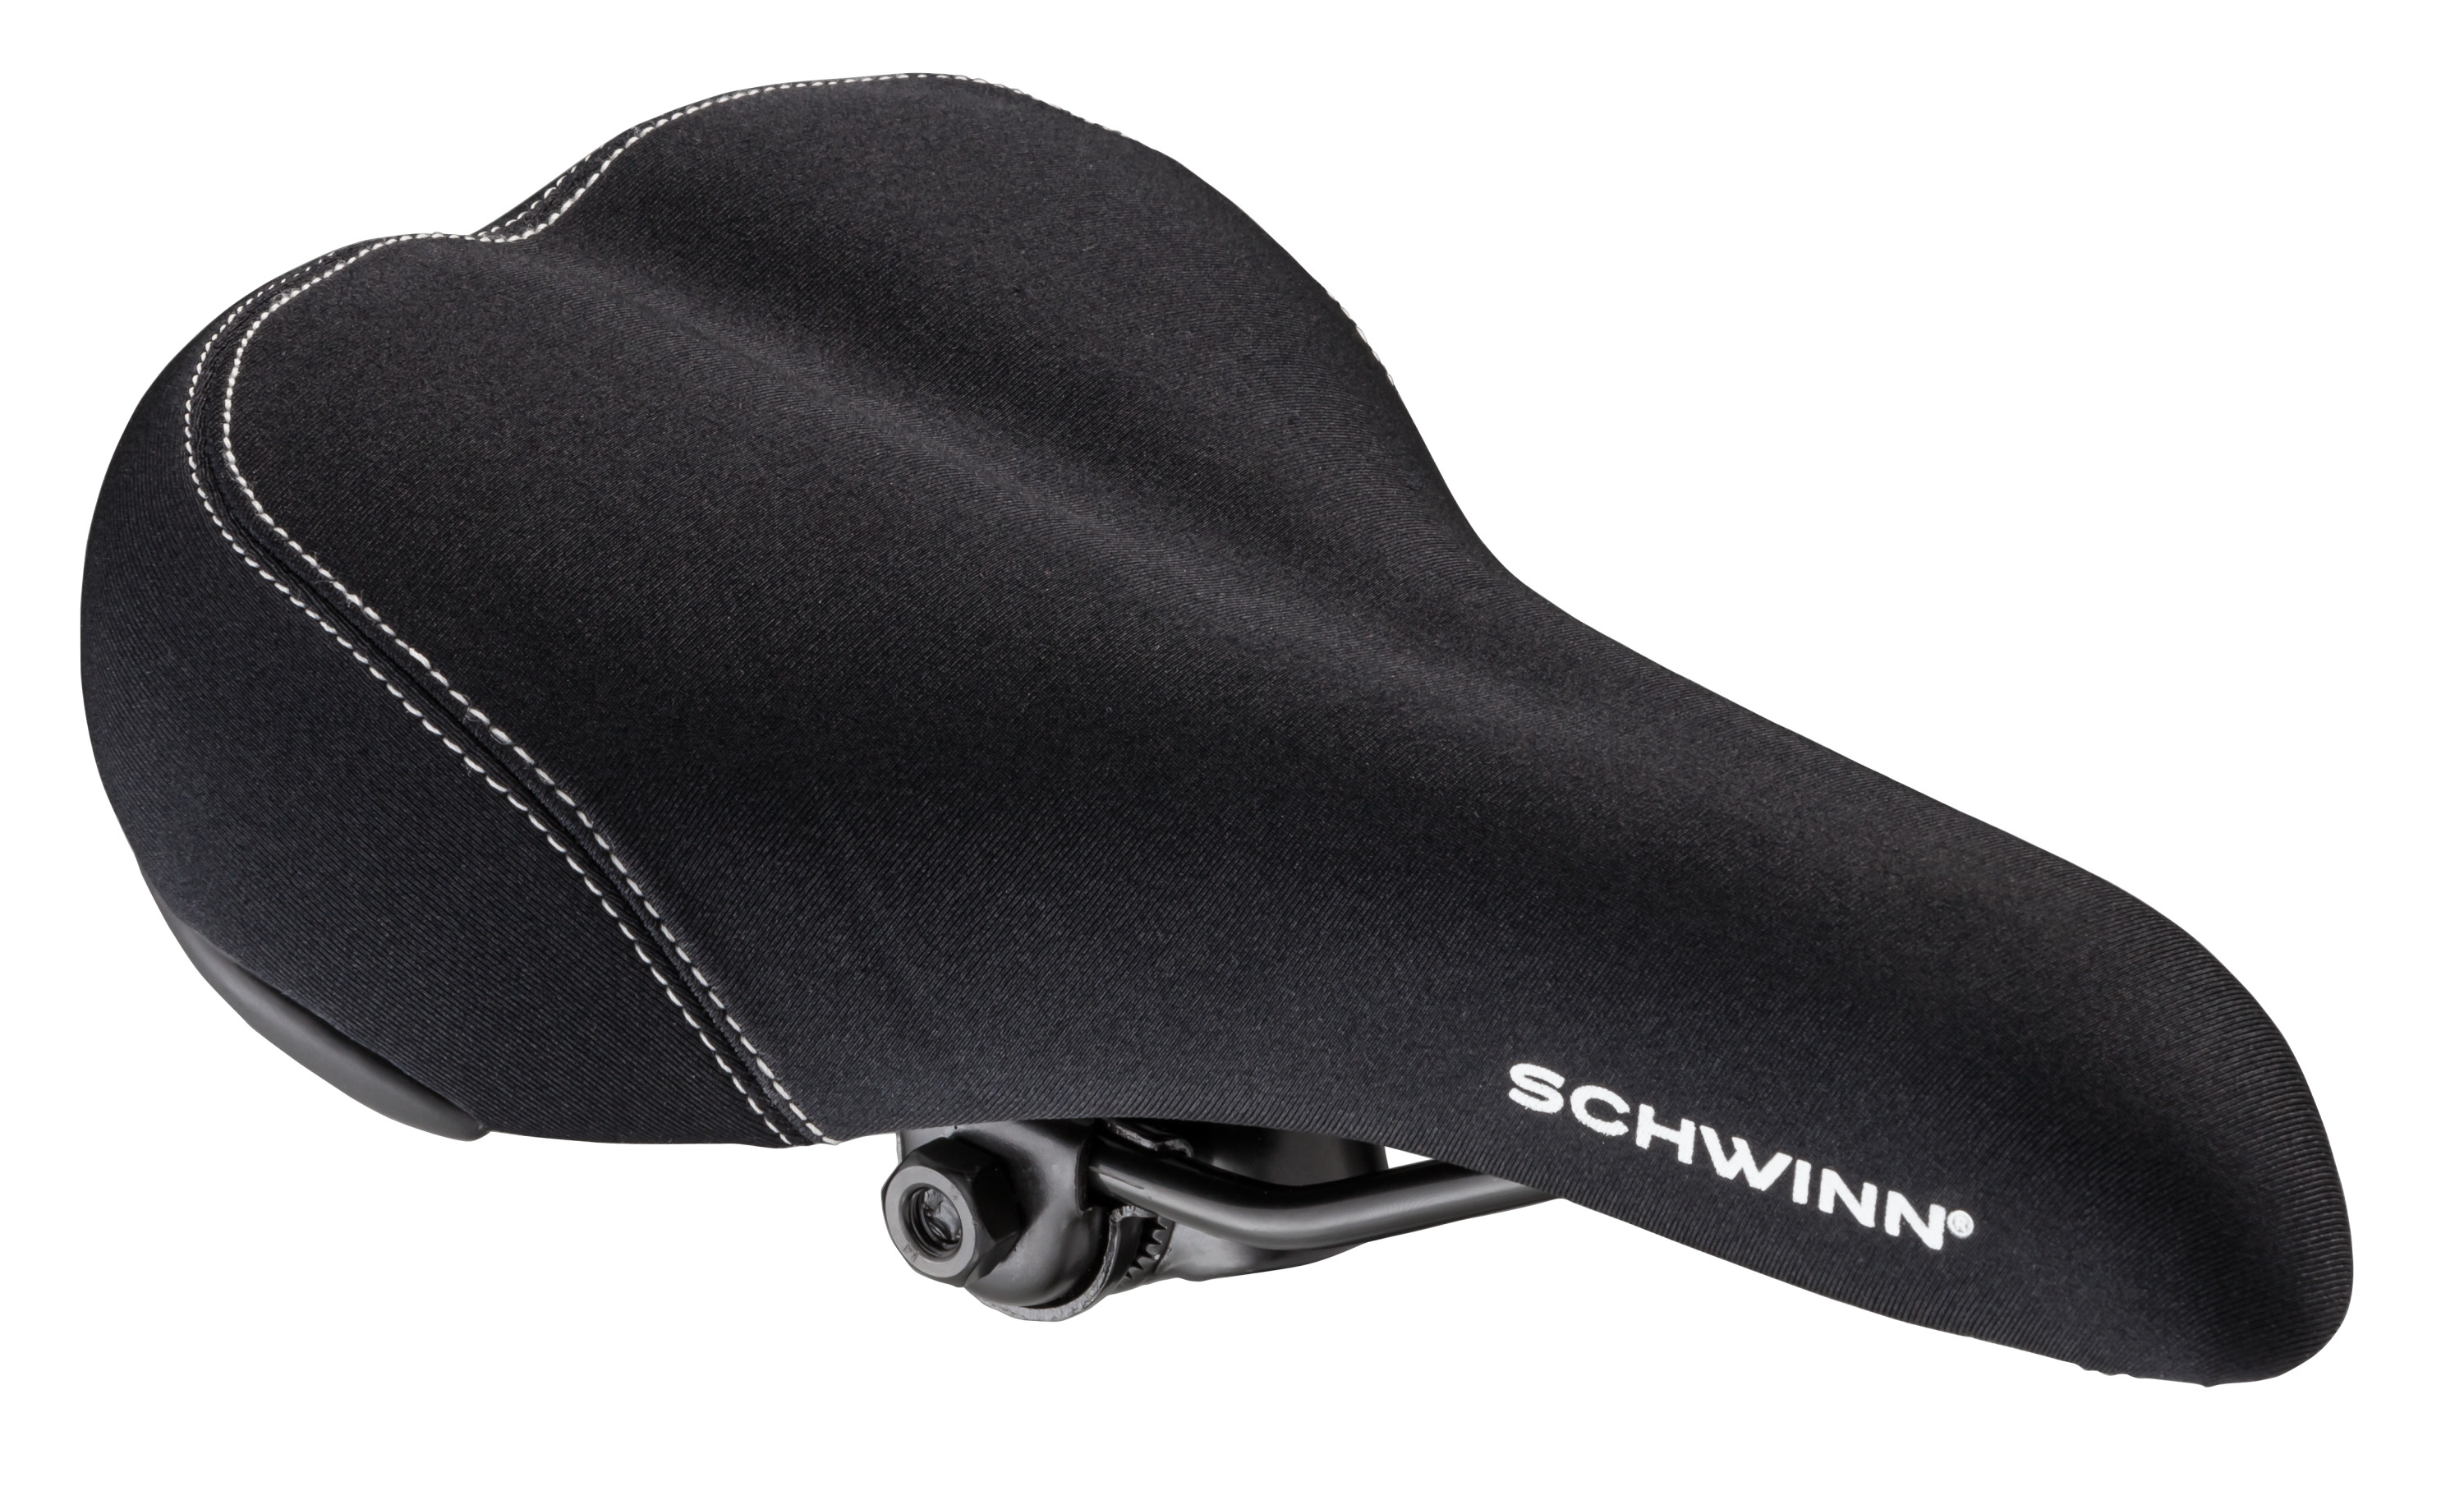 Schwinn Sport Dash Foam Weather Resistant Bicycle Saddle $10 + Free Shipping w/ Walmart+ or on $35+